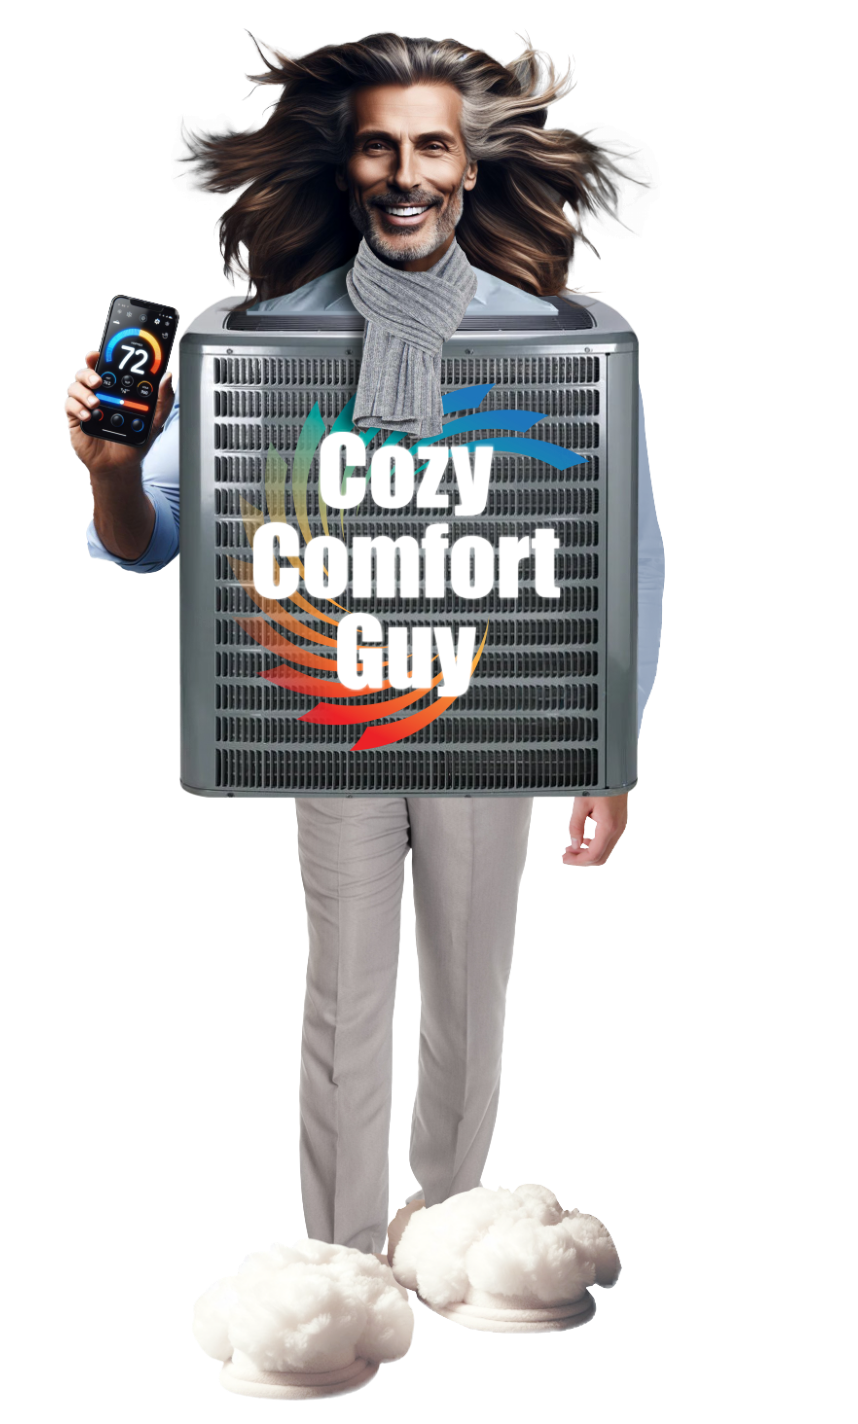 Signature's brand ambassador, Cozy Comfort Guy